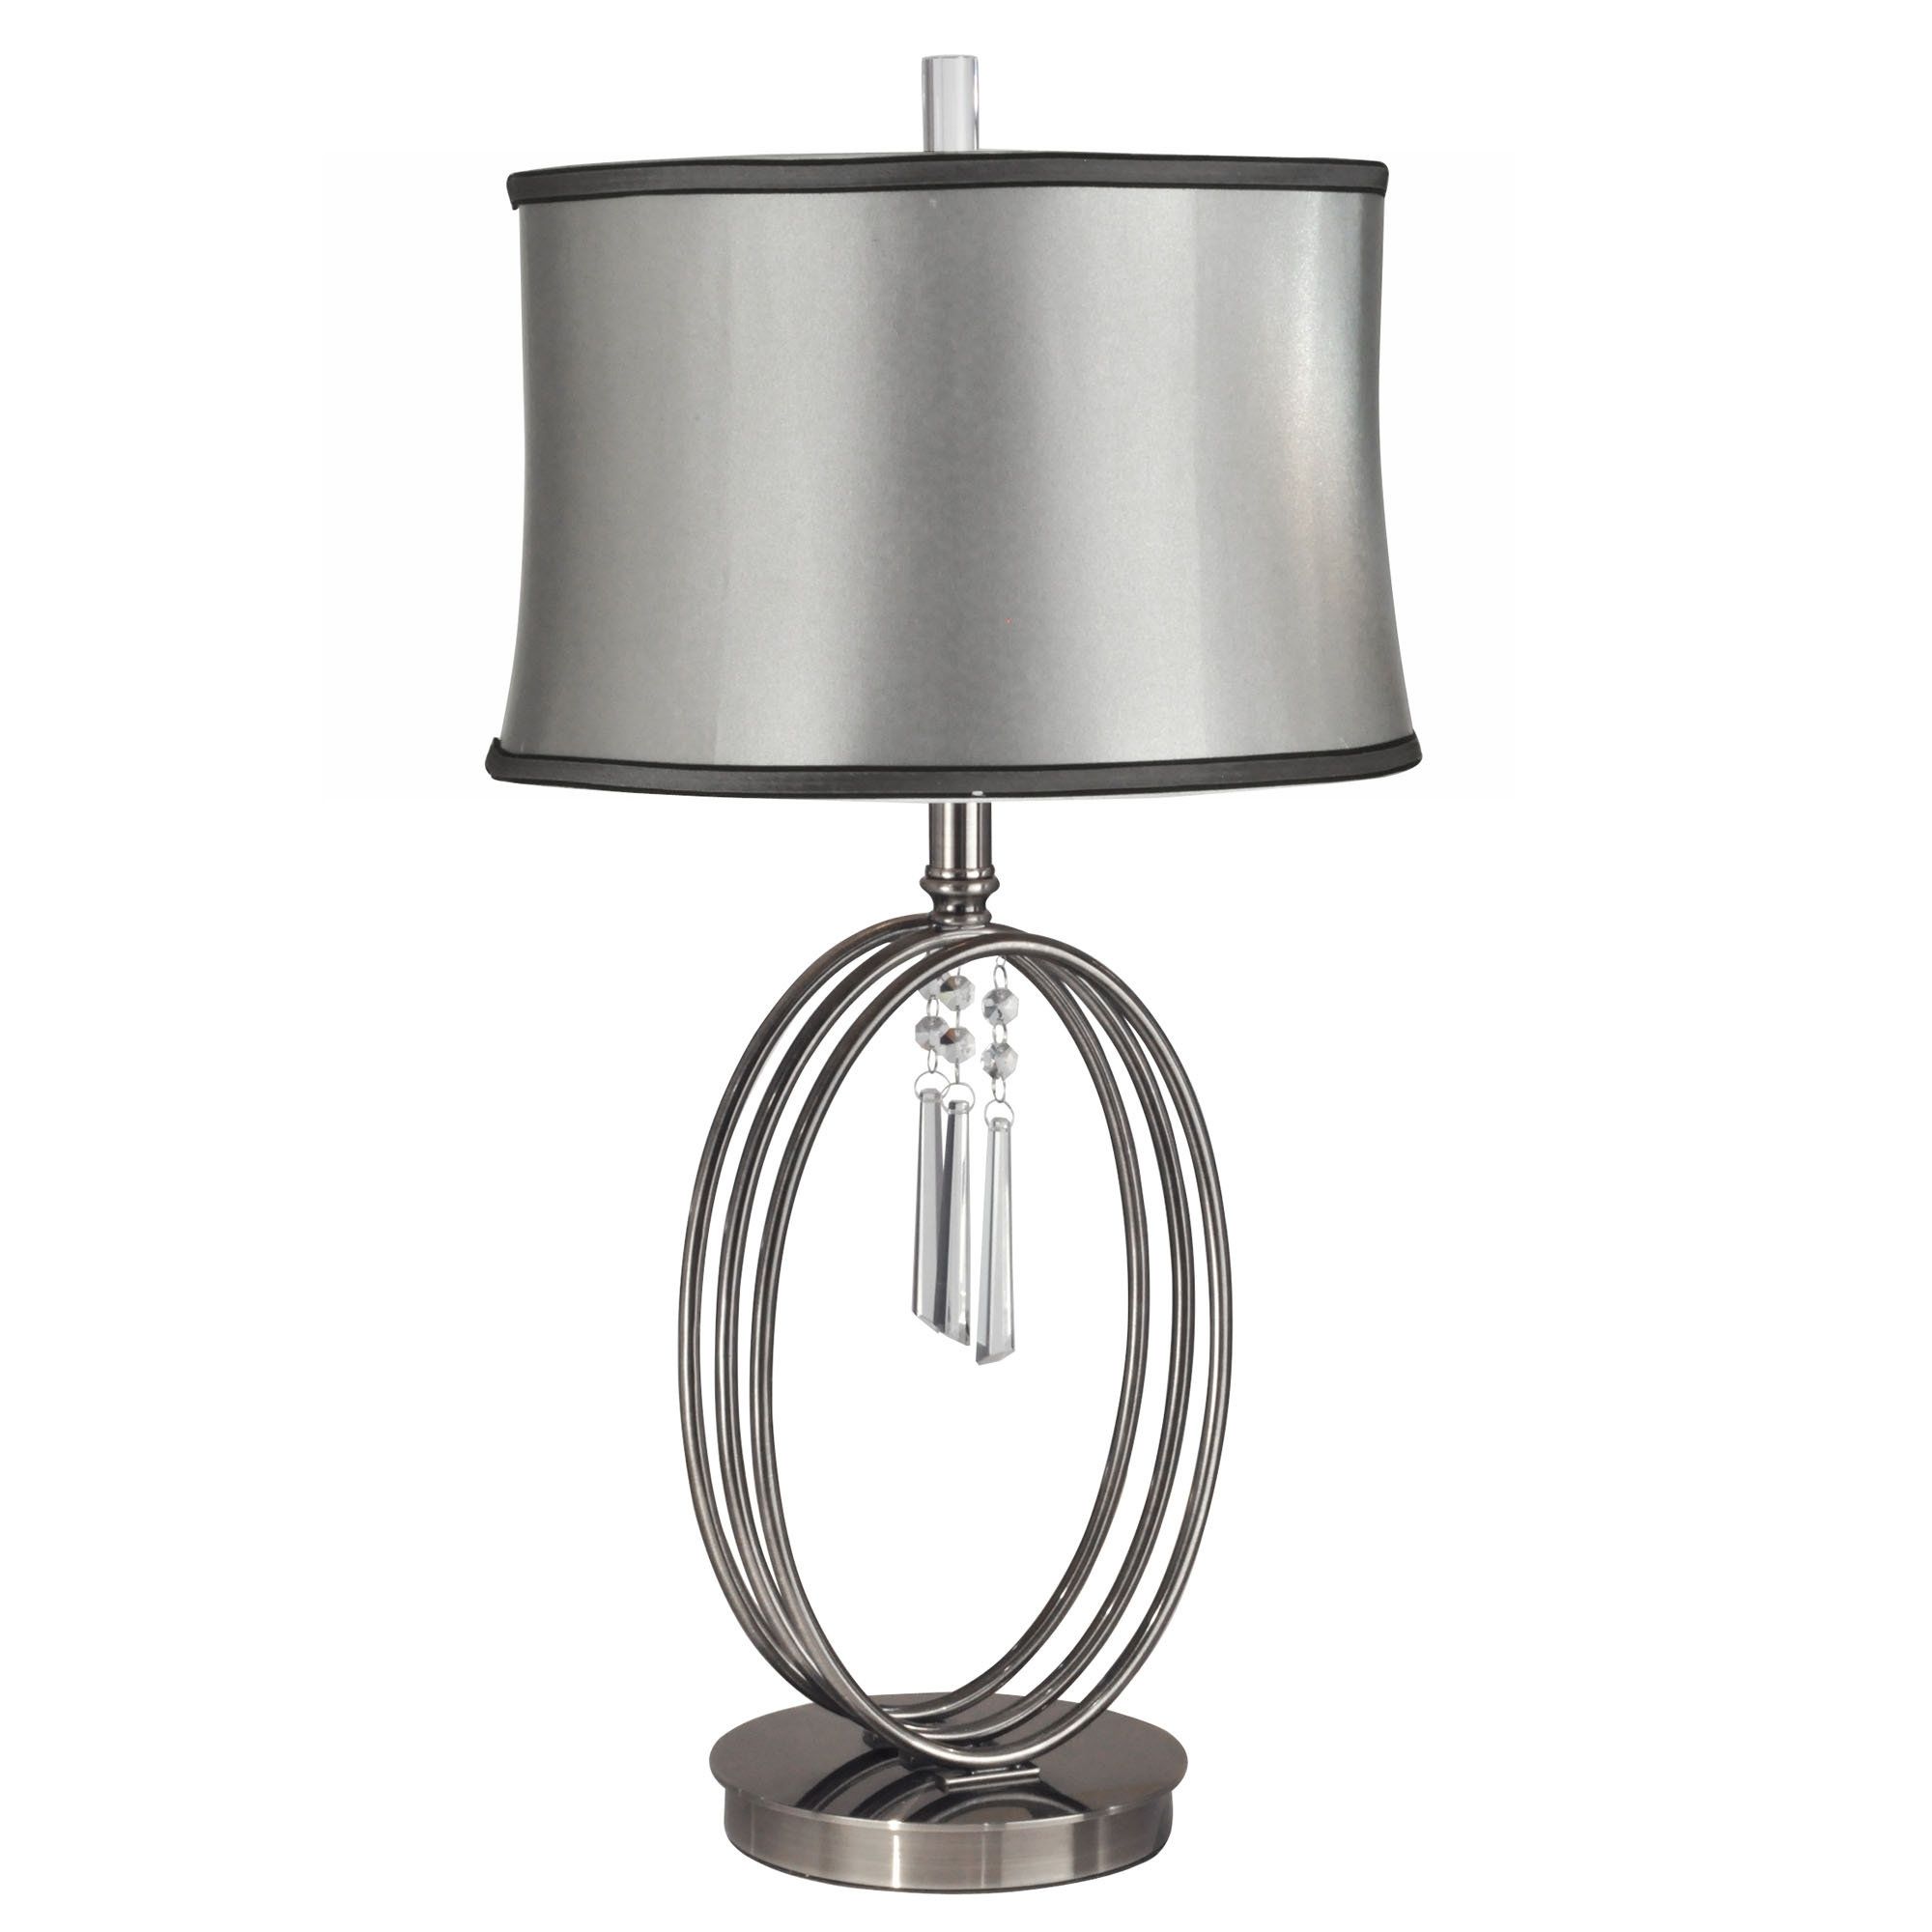 Uncategorized : End Table Lamps For Bedroom Modern Floor Lamp Regarding Preferred Primitive Living Room Table Lamps (View 8 of 15)